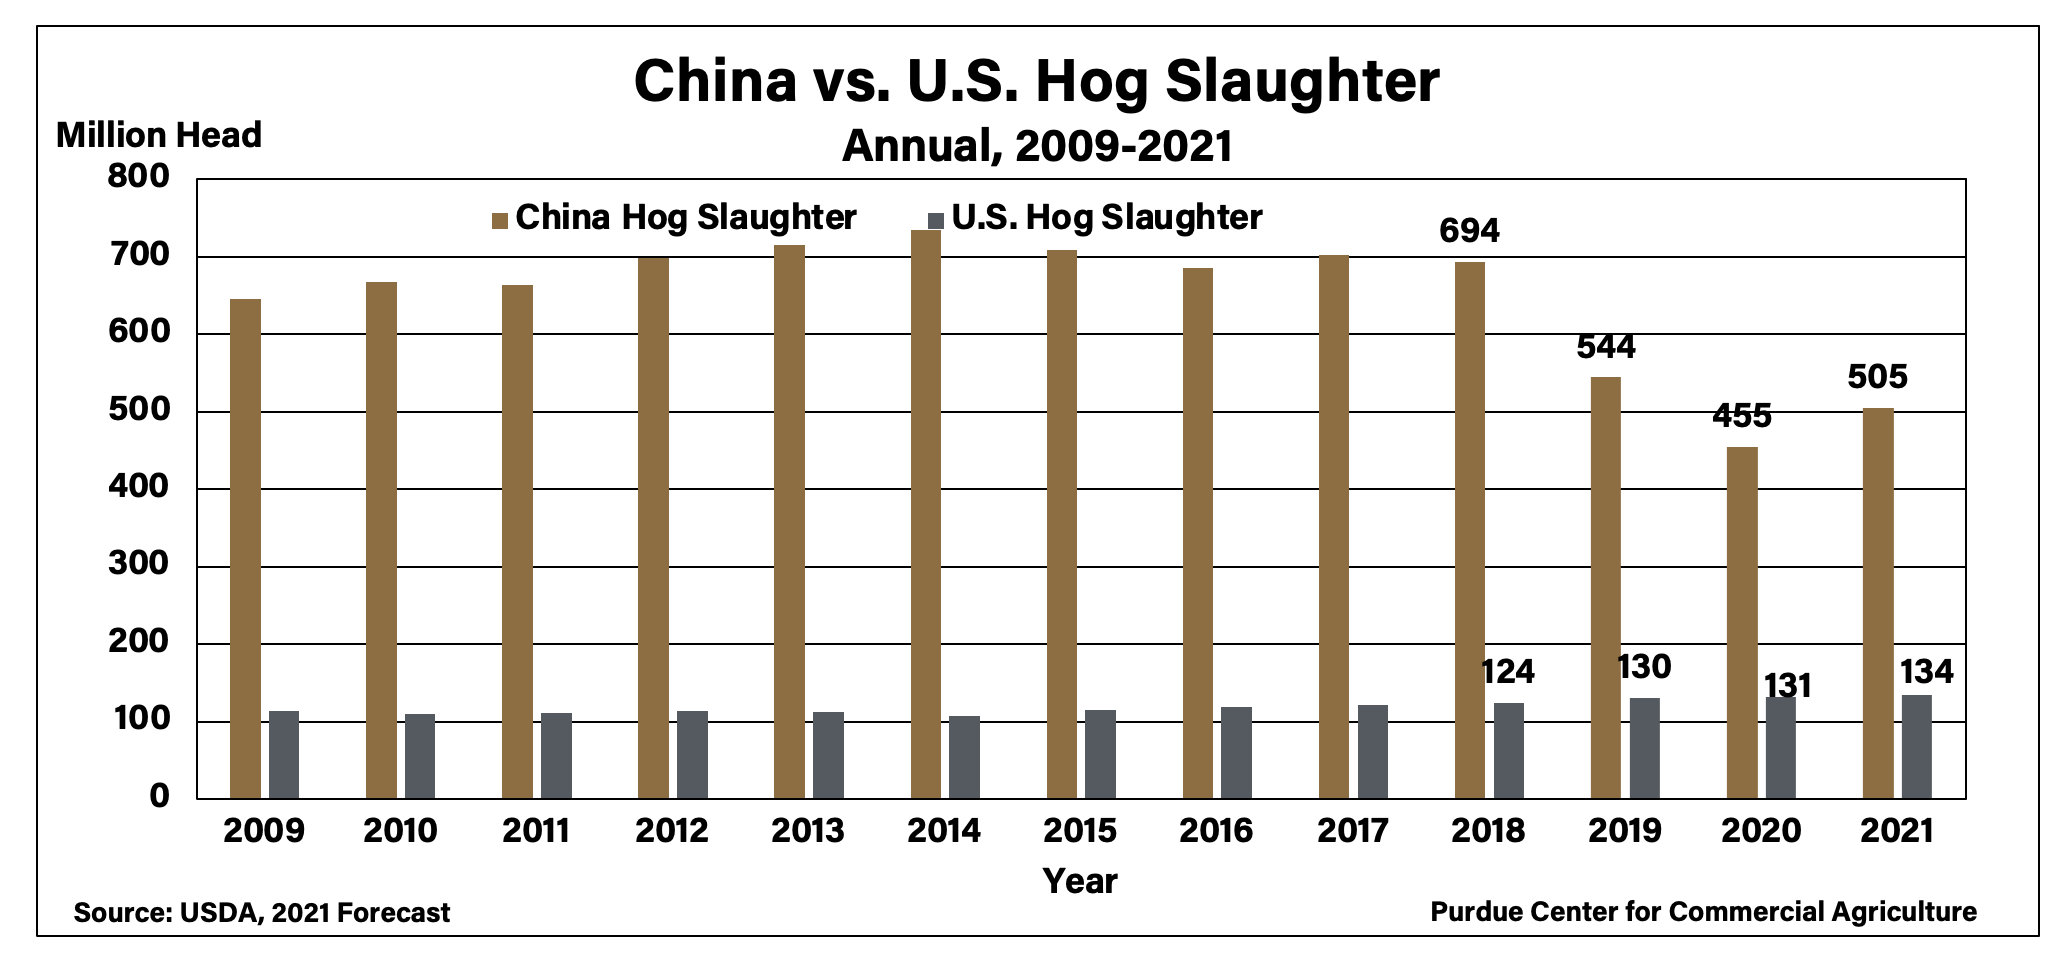 Figure 3: China versus U.S. Hog Slaughter, Annual 2009-2021